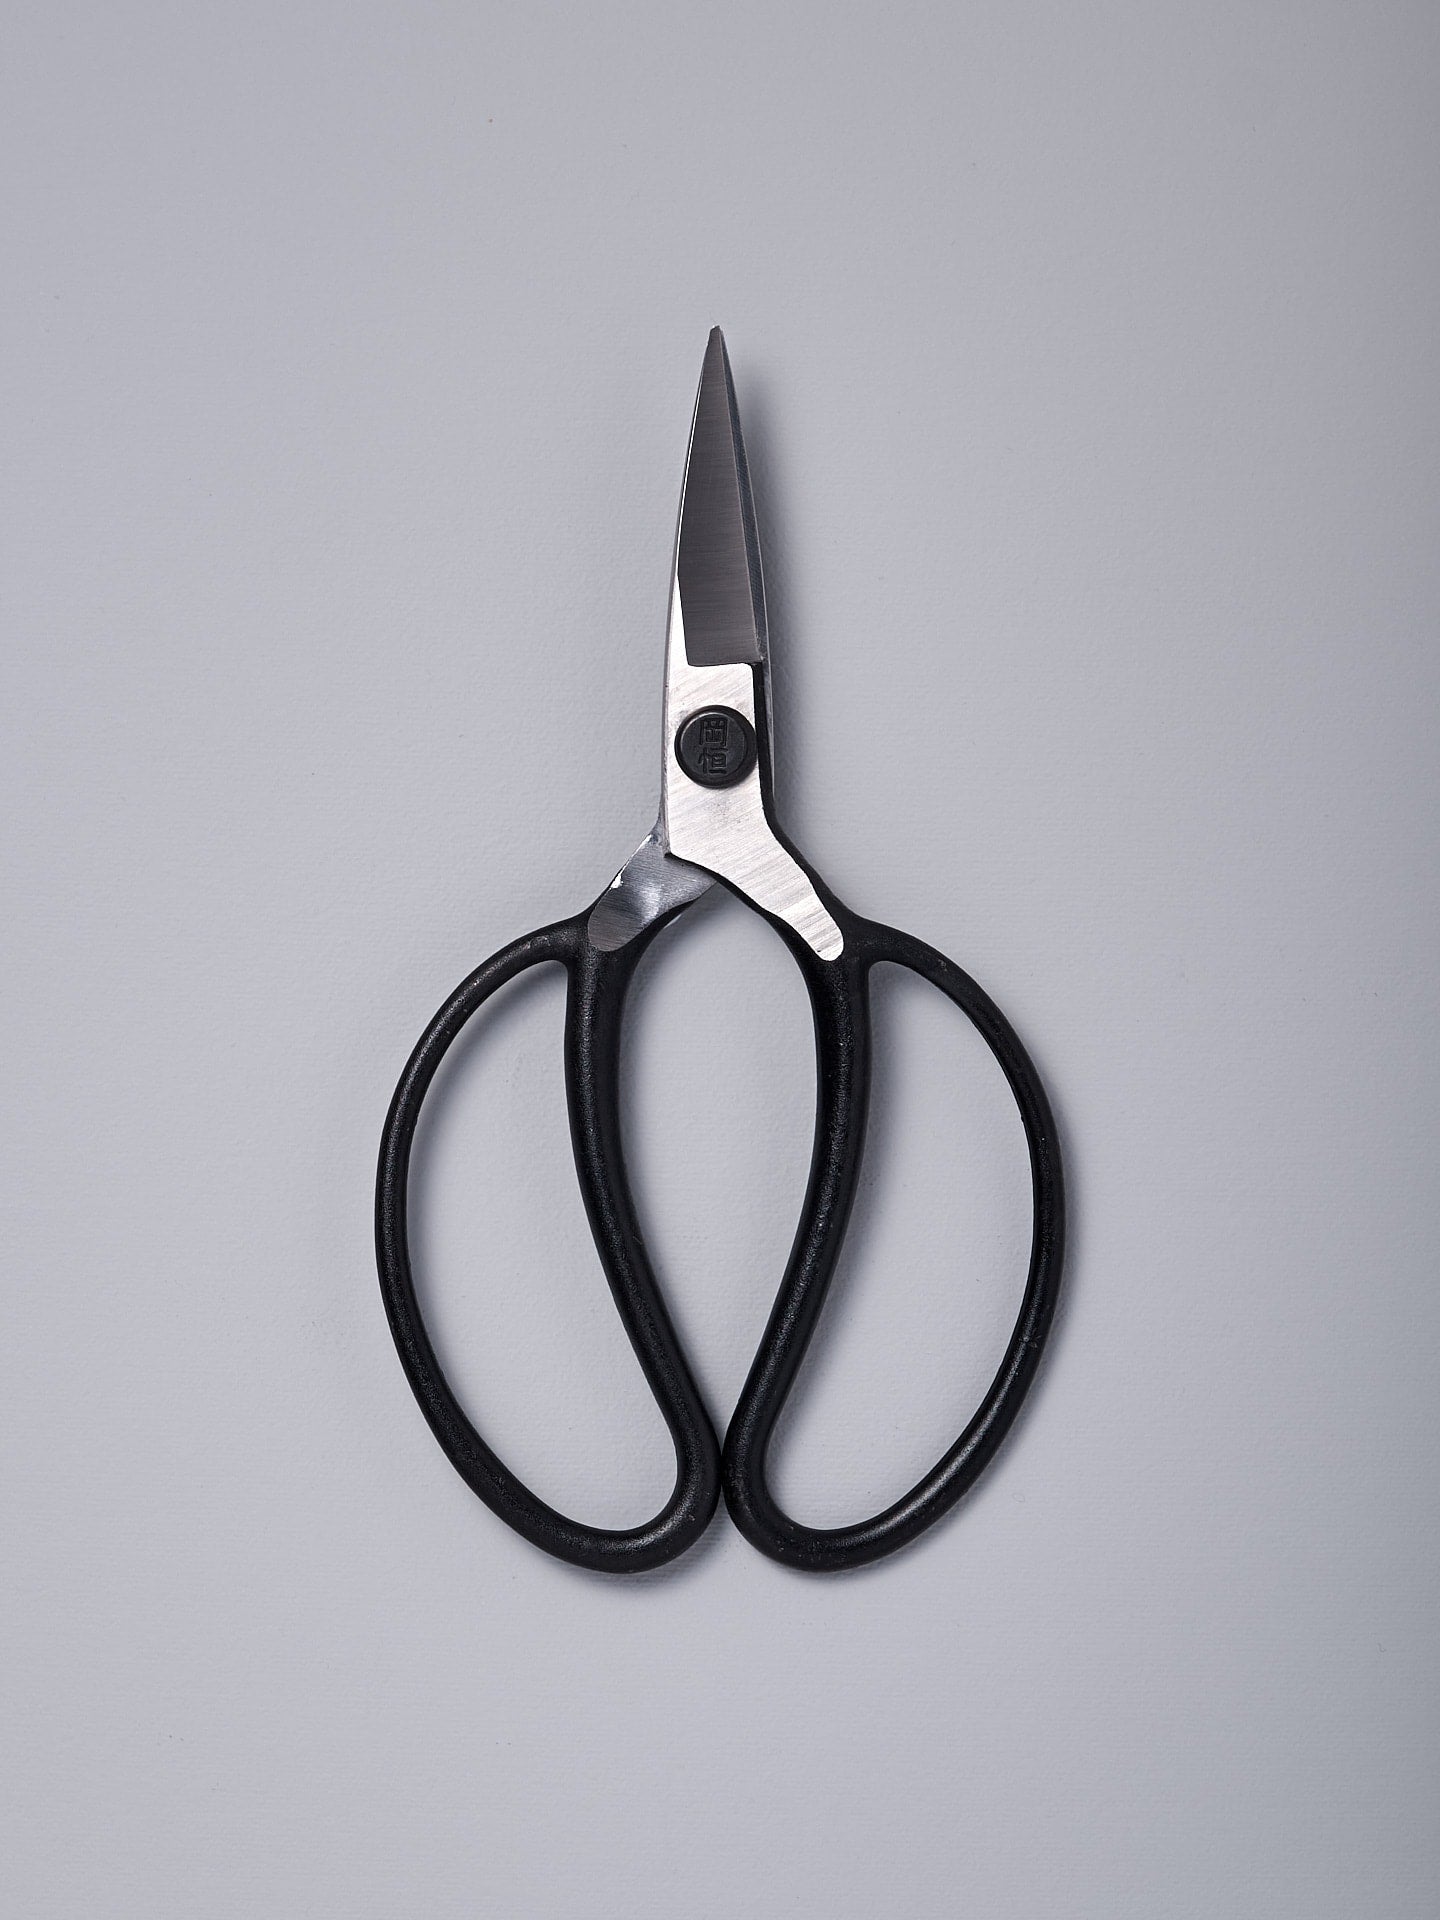 A pair of Okatsune Garden Scissors №203 – Large on a white background.